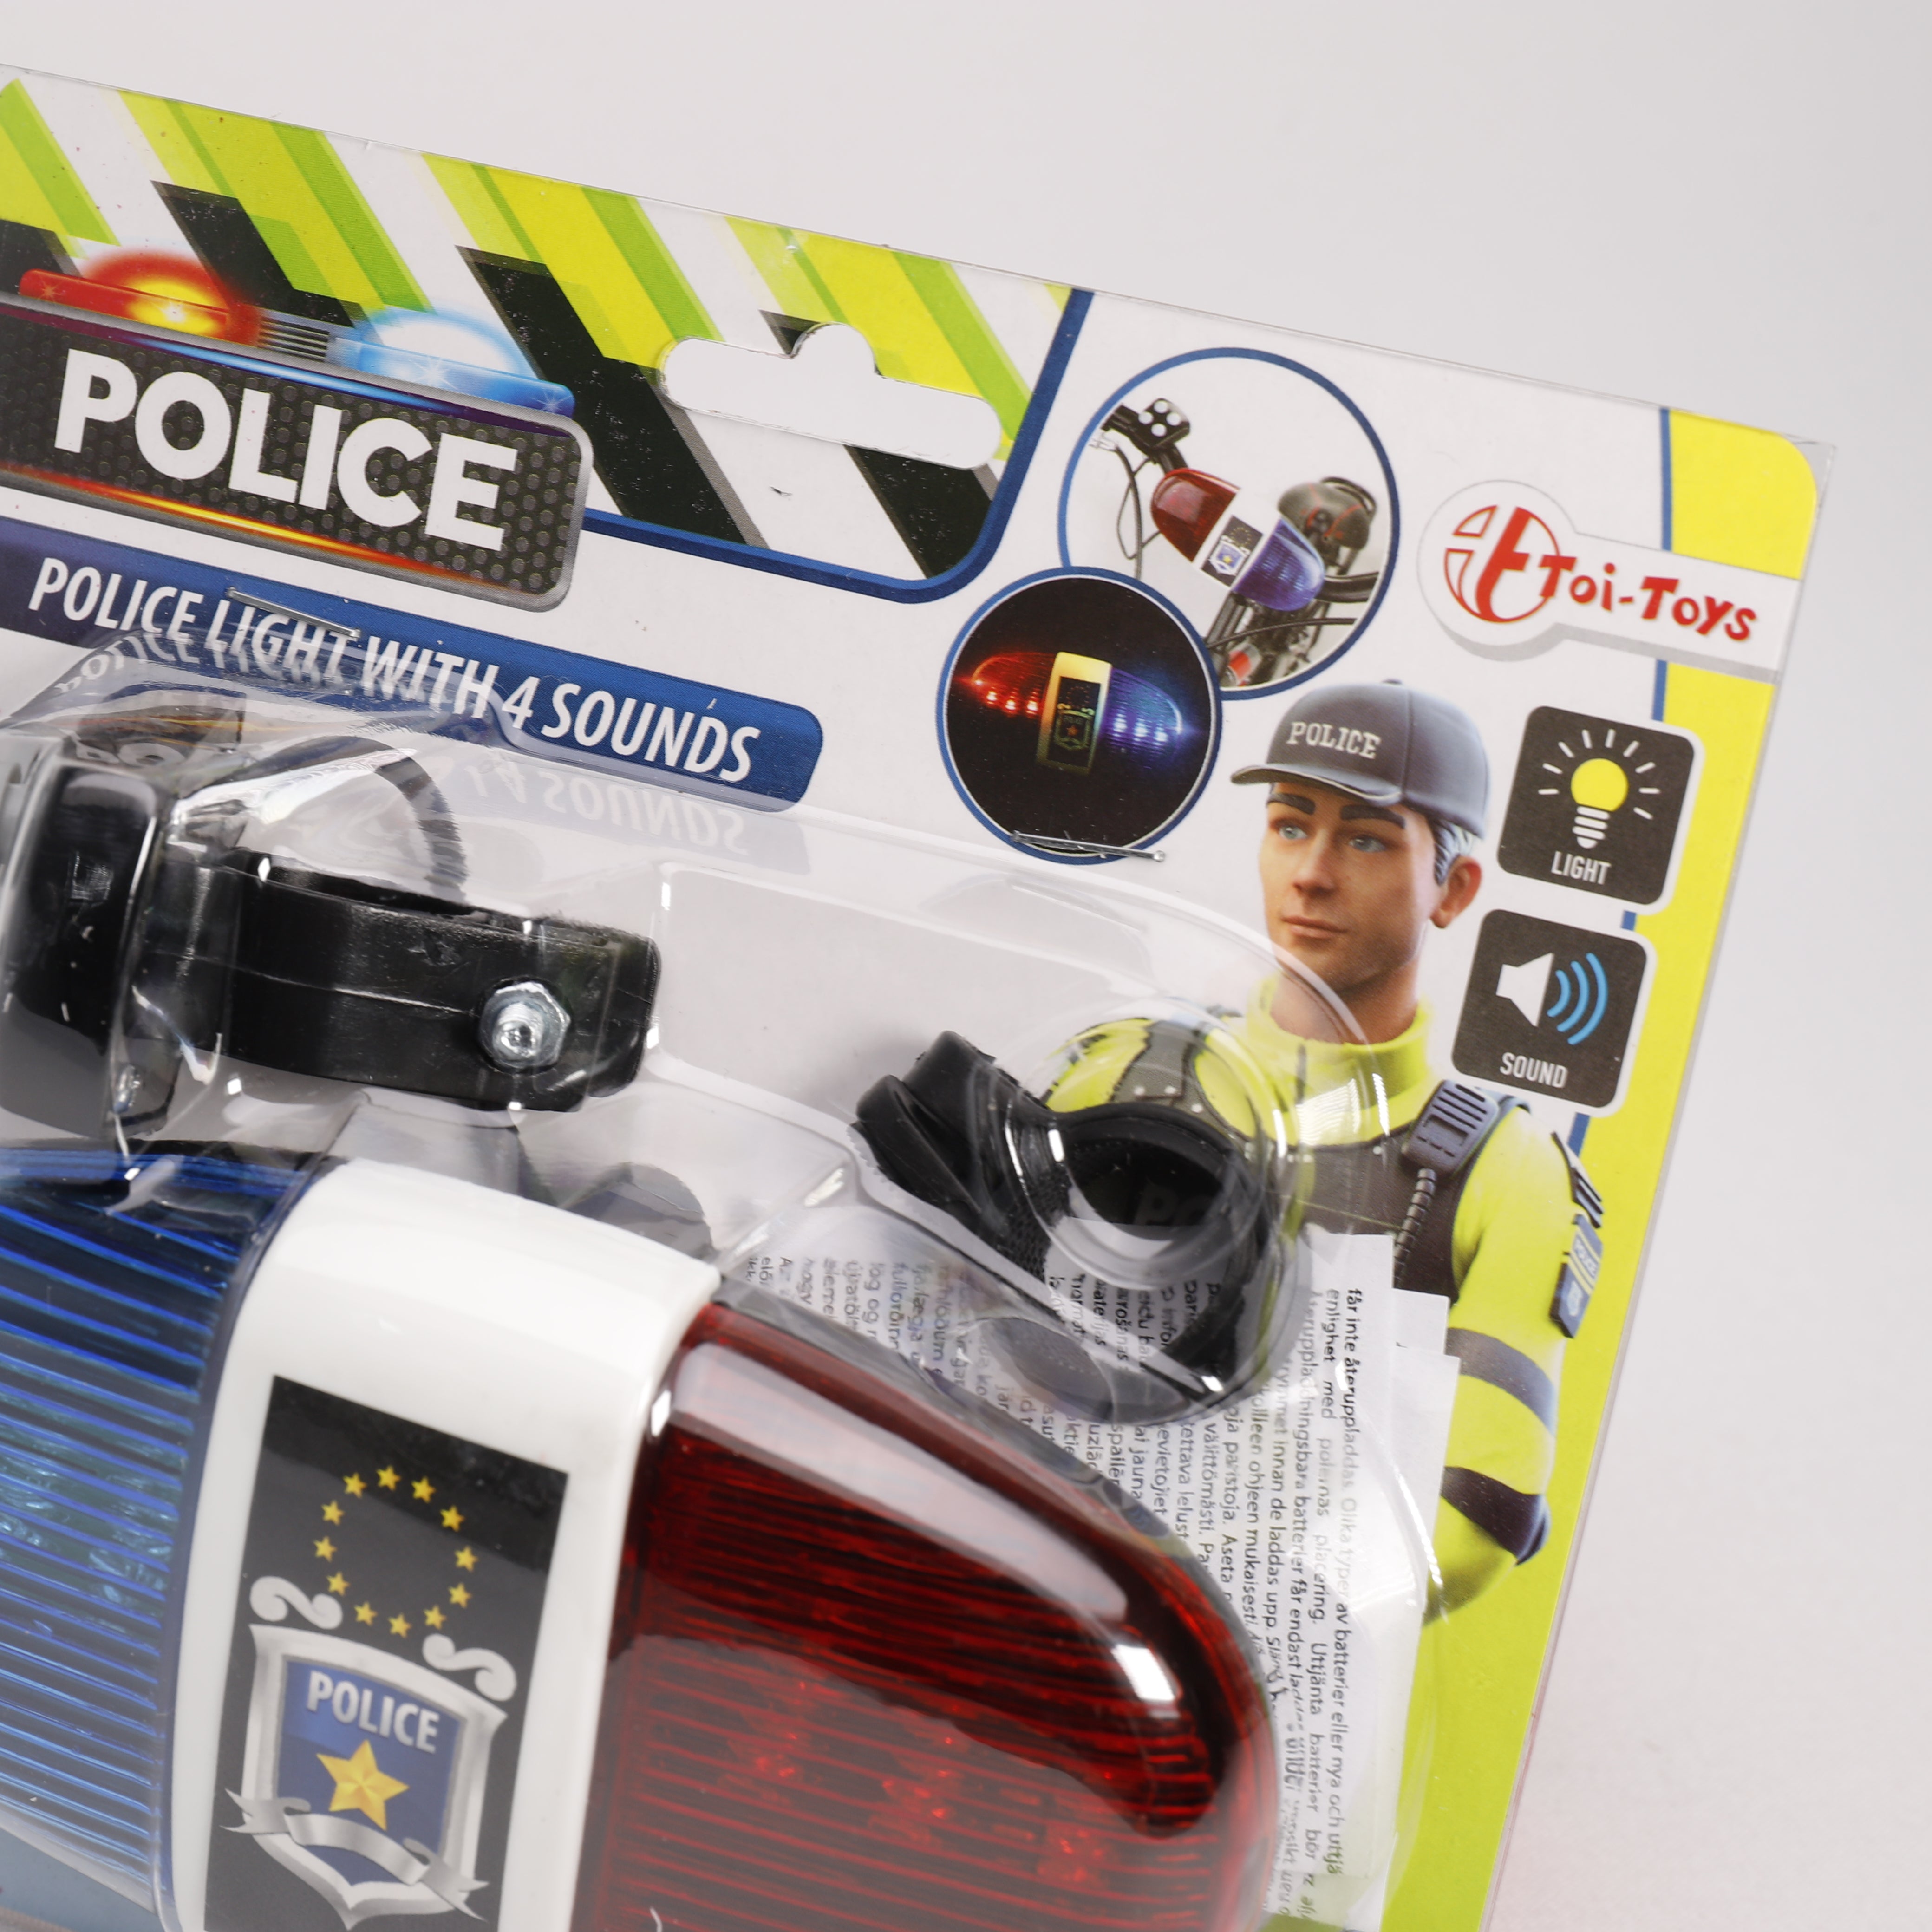 Kaufe 6 LED 4 Ton Töne Fahrräder Klingel Polizeiauto Licht